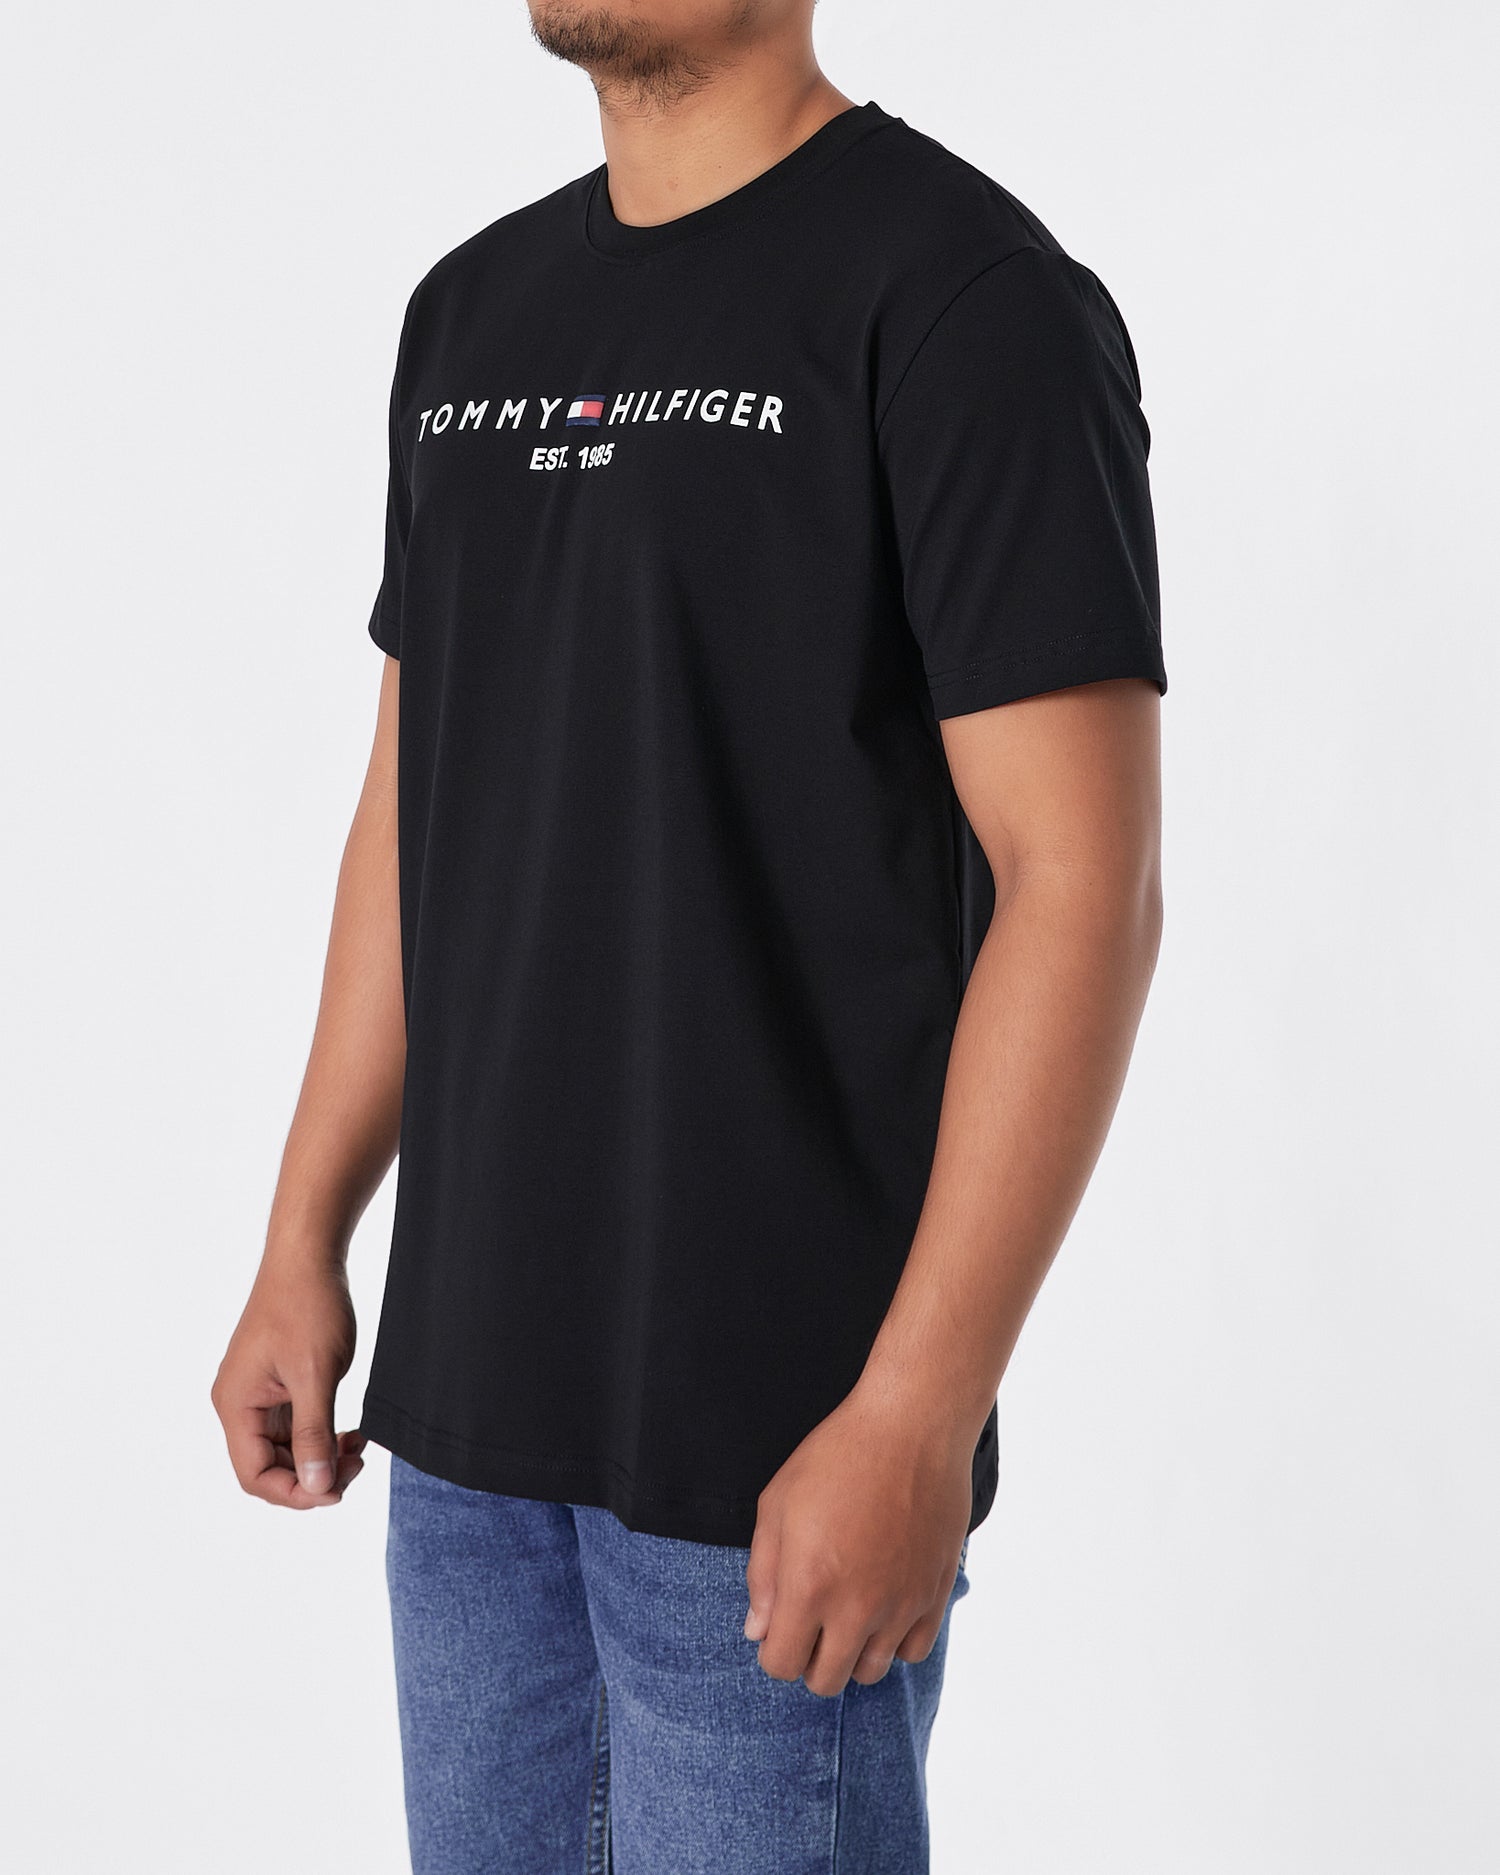 TH Logo Printed Men Black T-Shirt 14.90